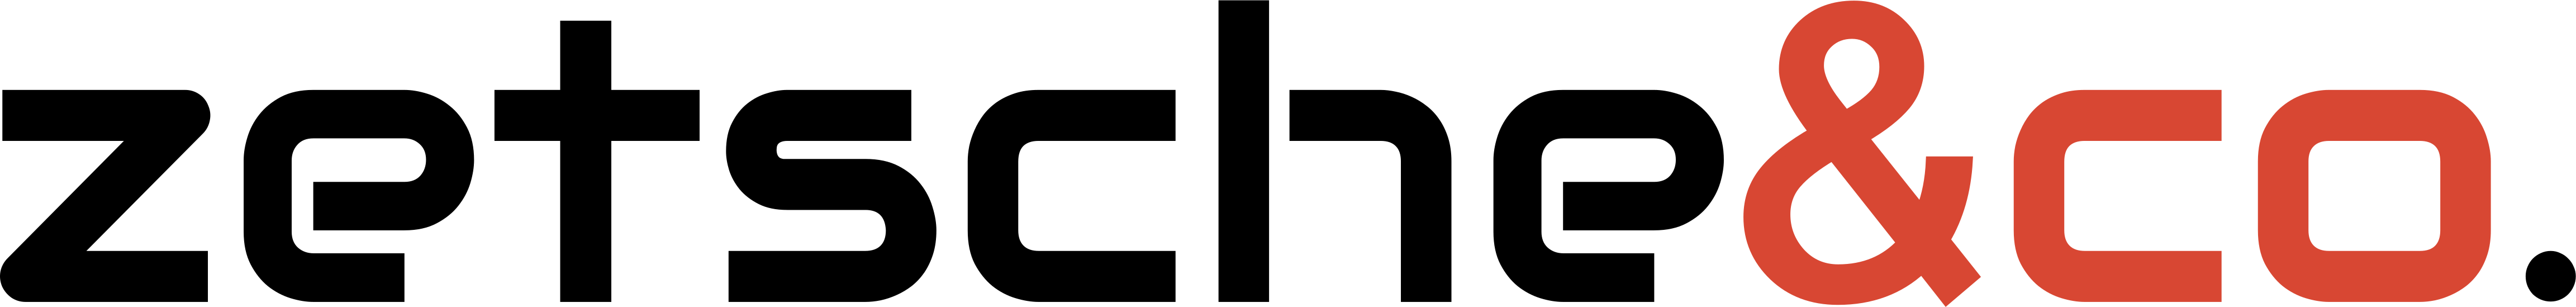 Logo Zetsche & Co.